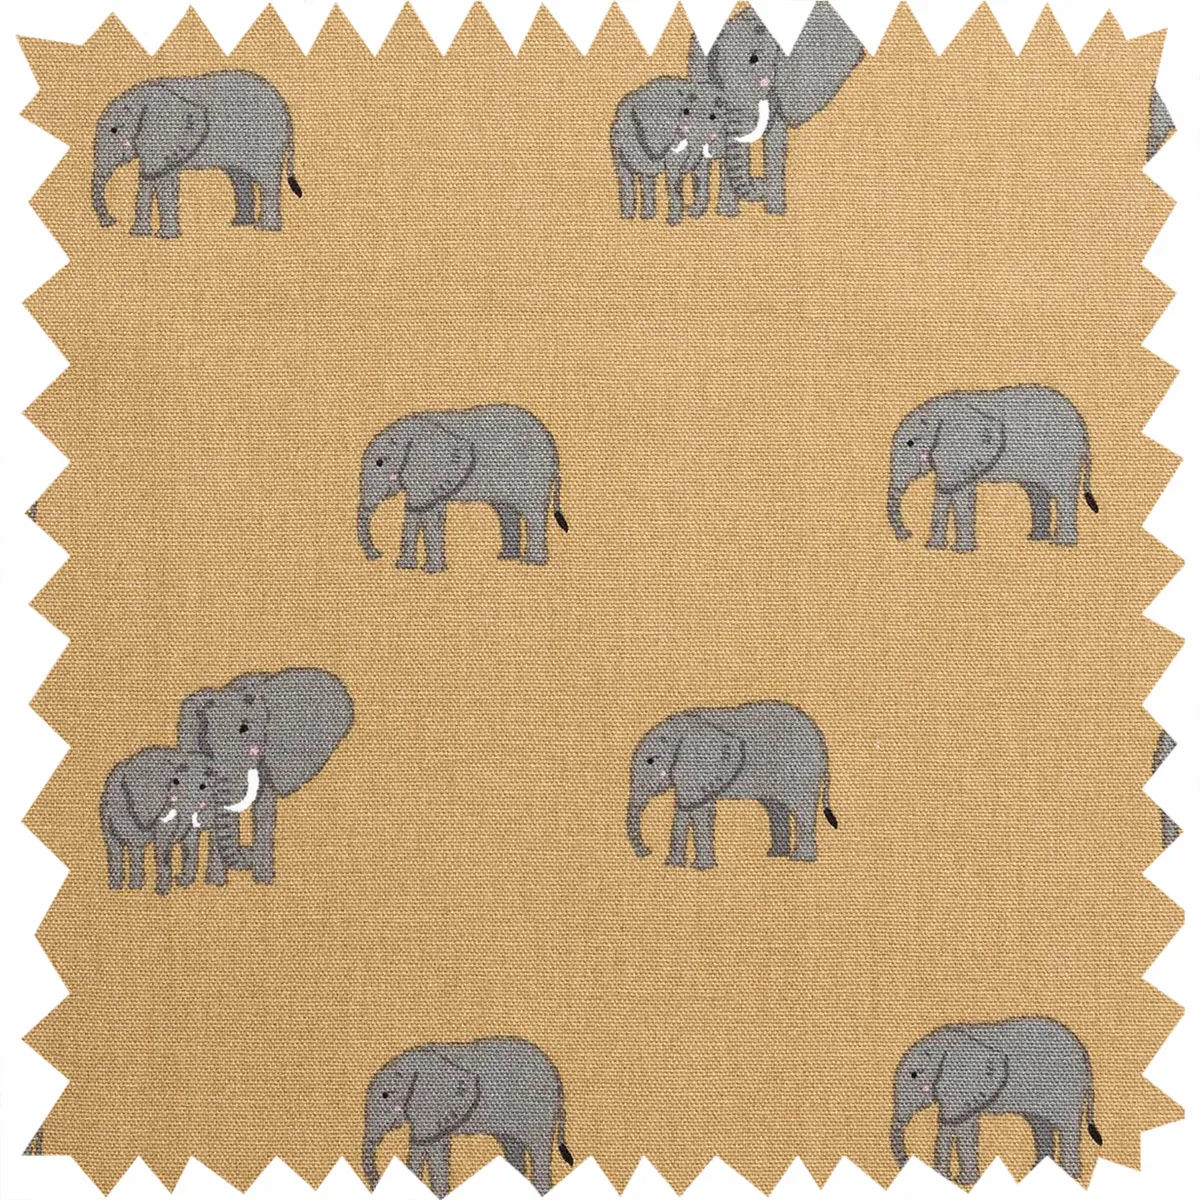 Elephant fabric, £26 per metre, Sophie Allport